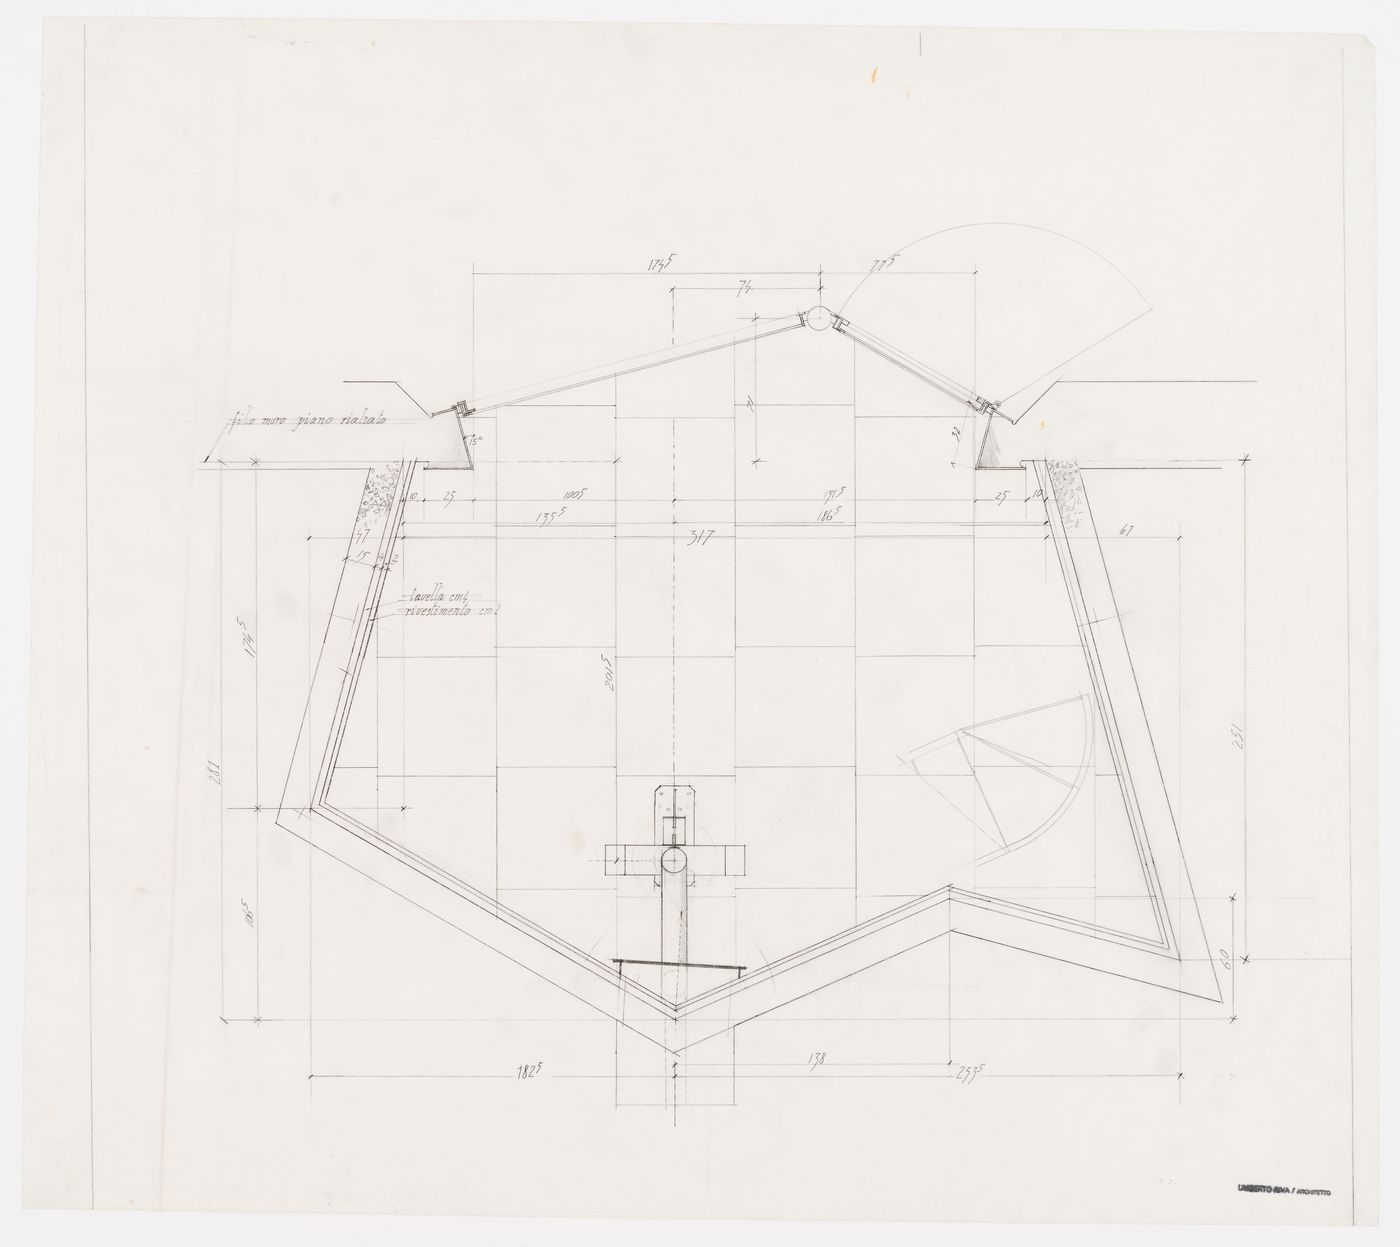 Plan of the floor of the loggia in the garden for Casa Frea, Milan, Italy